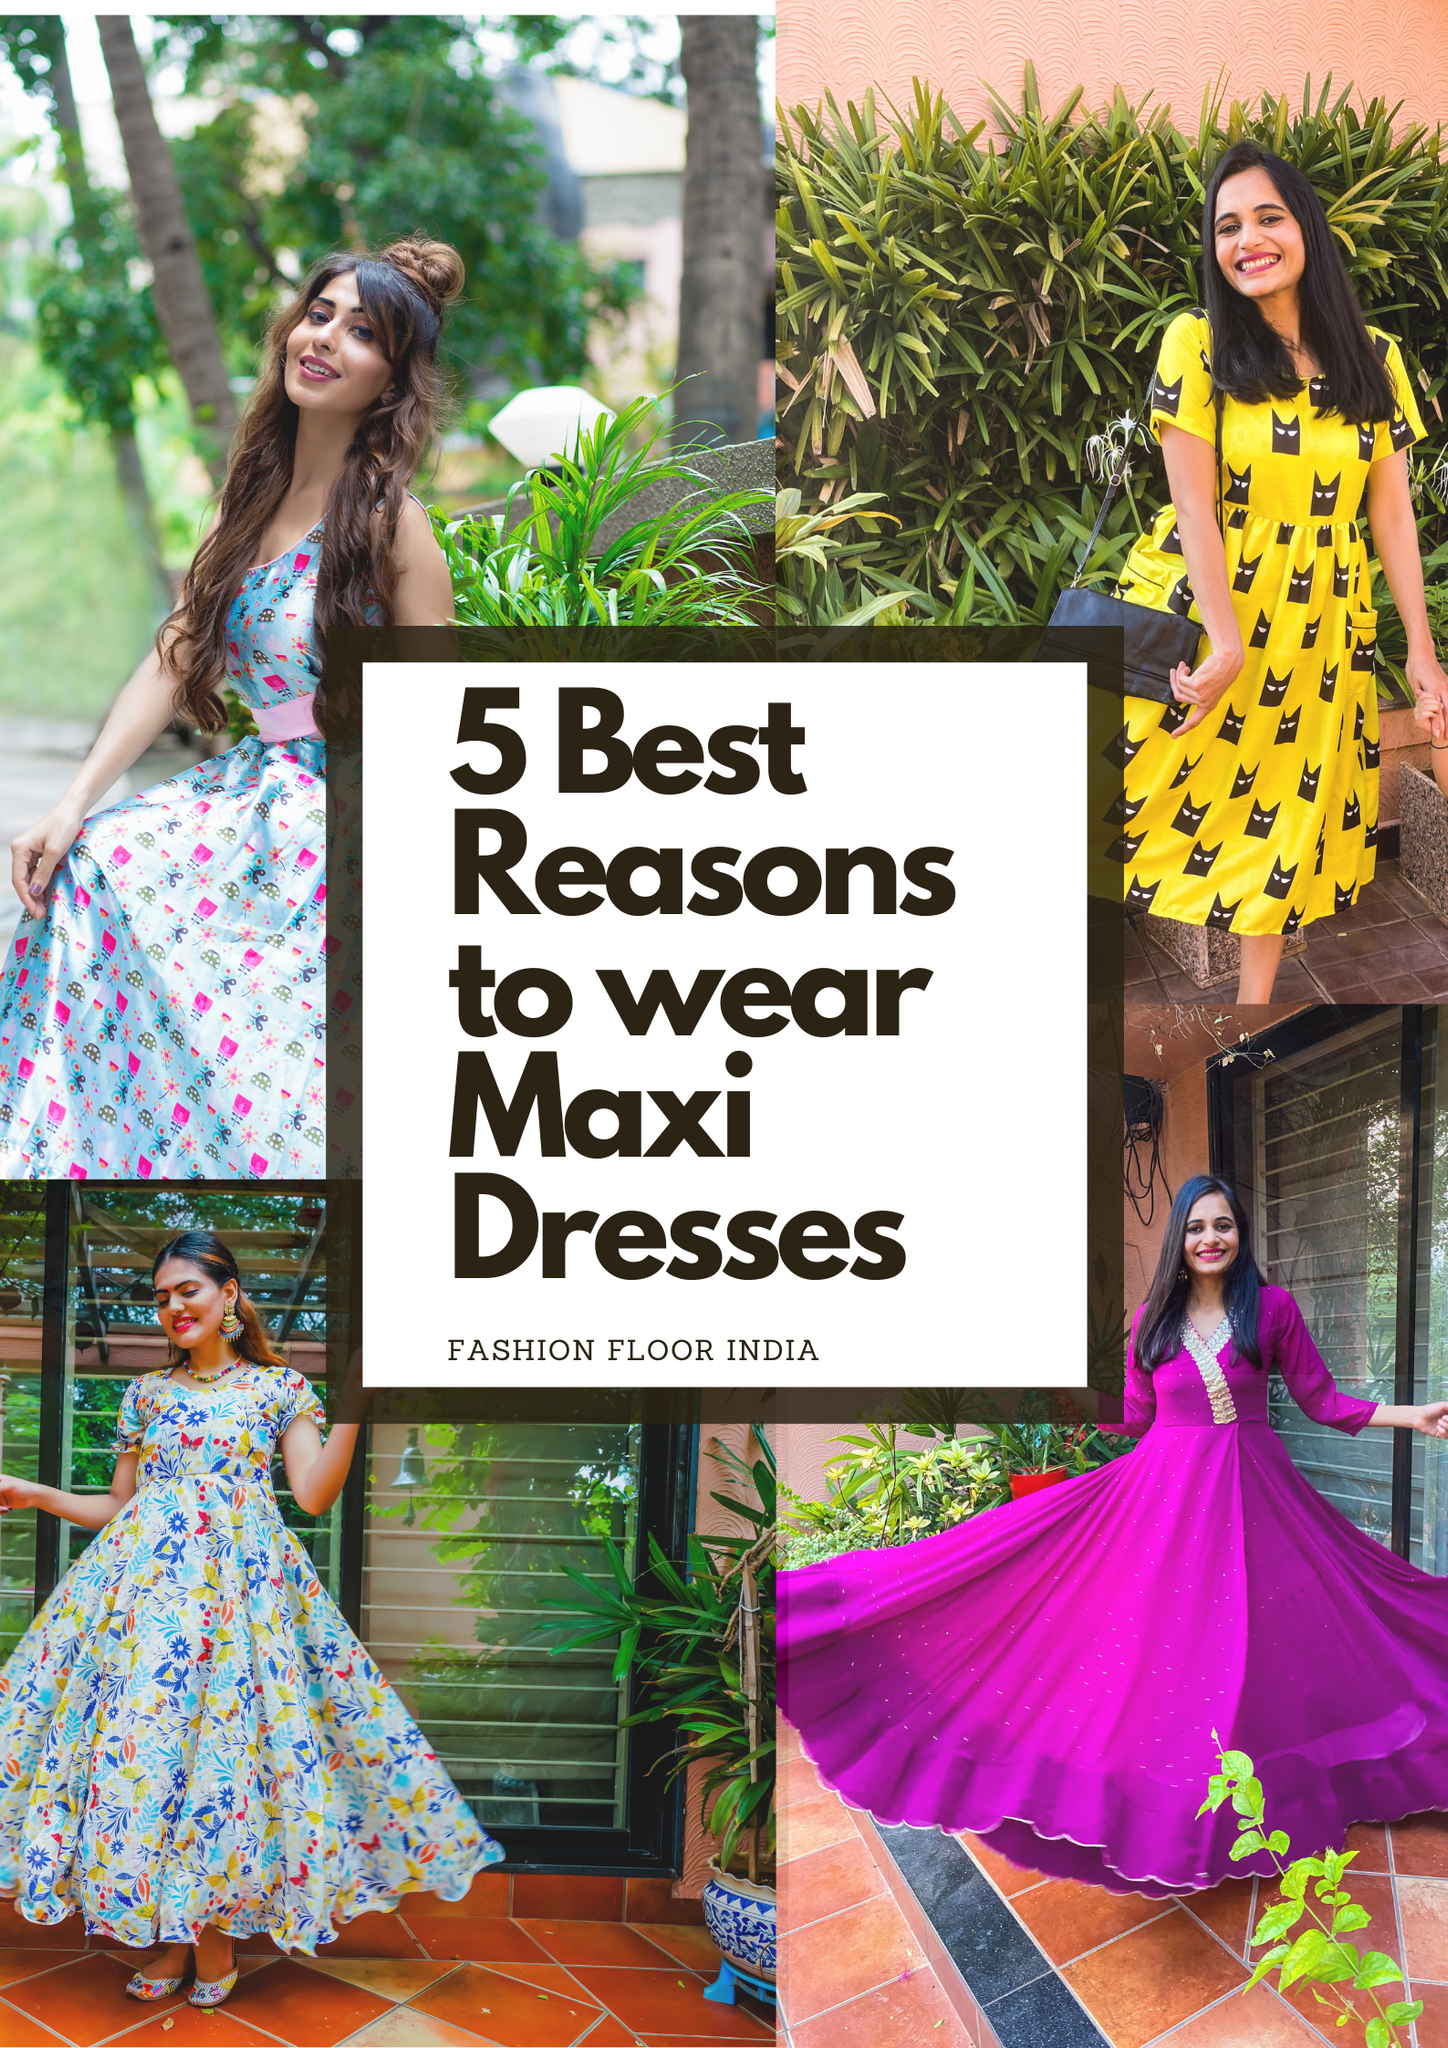 5 Best Reasons to wear Maxi dresses